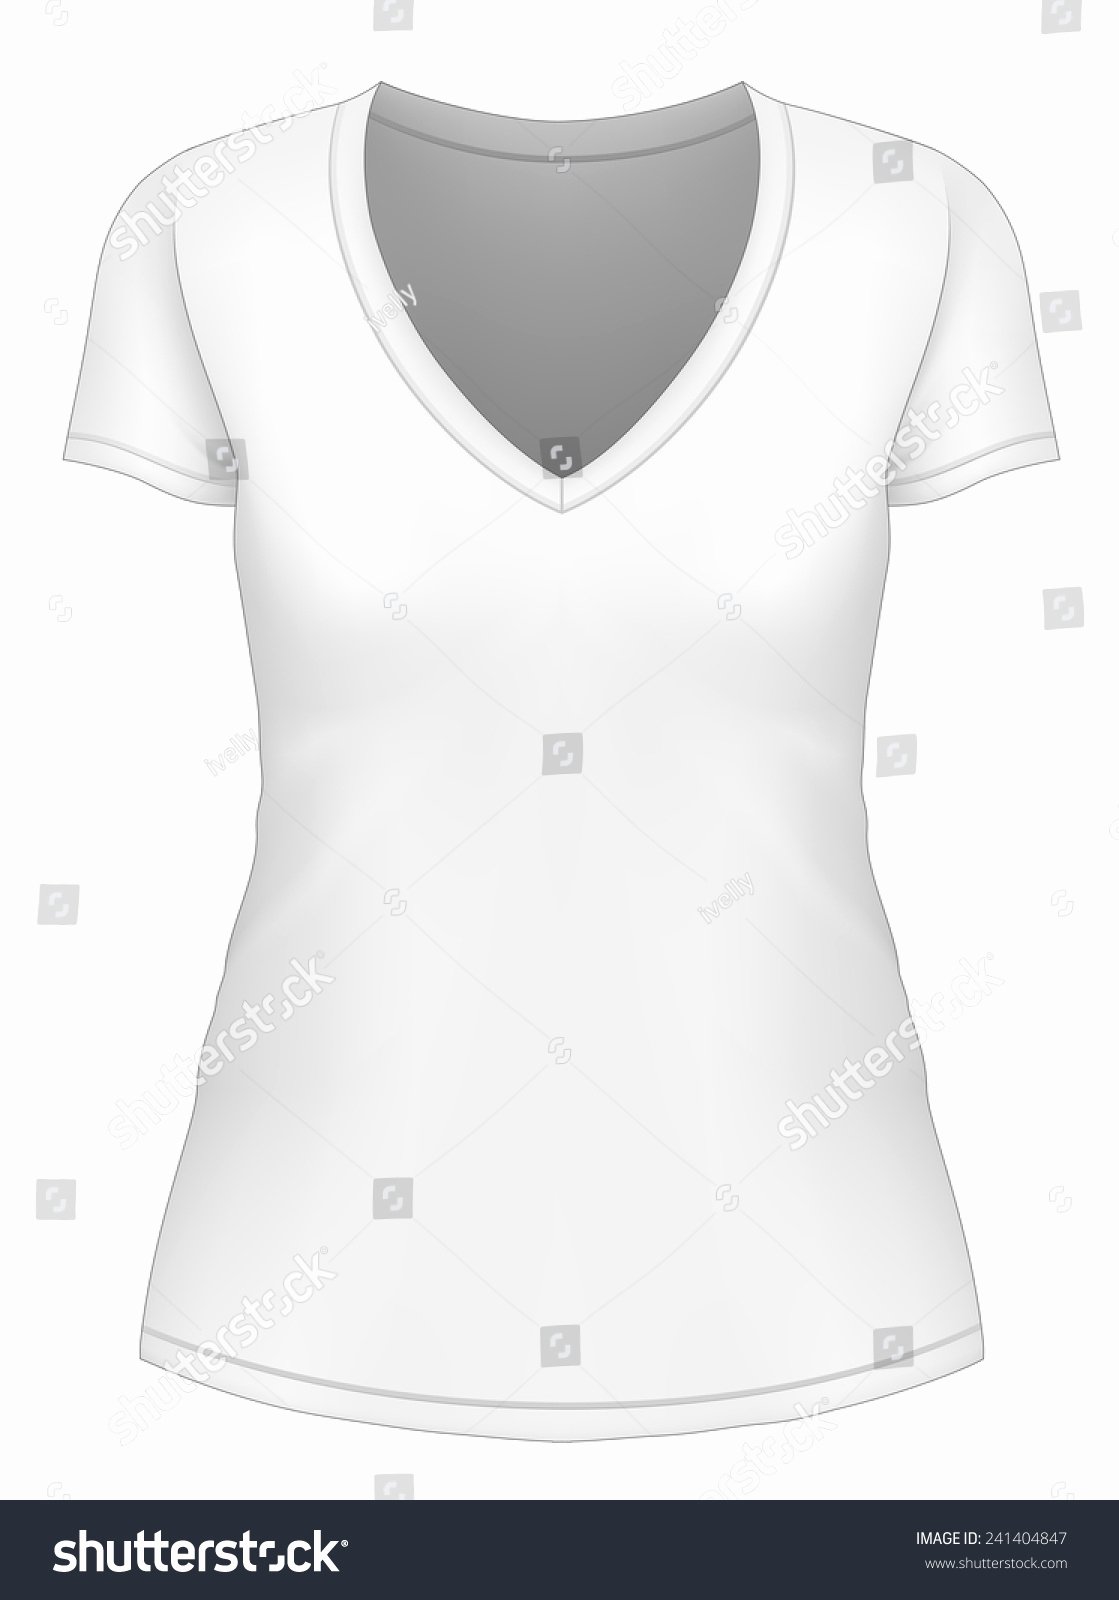 Womens Vneck Tshirt Design Template Vector Stock Vector